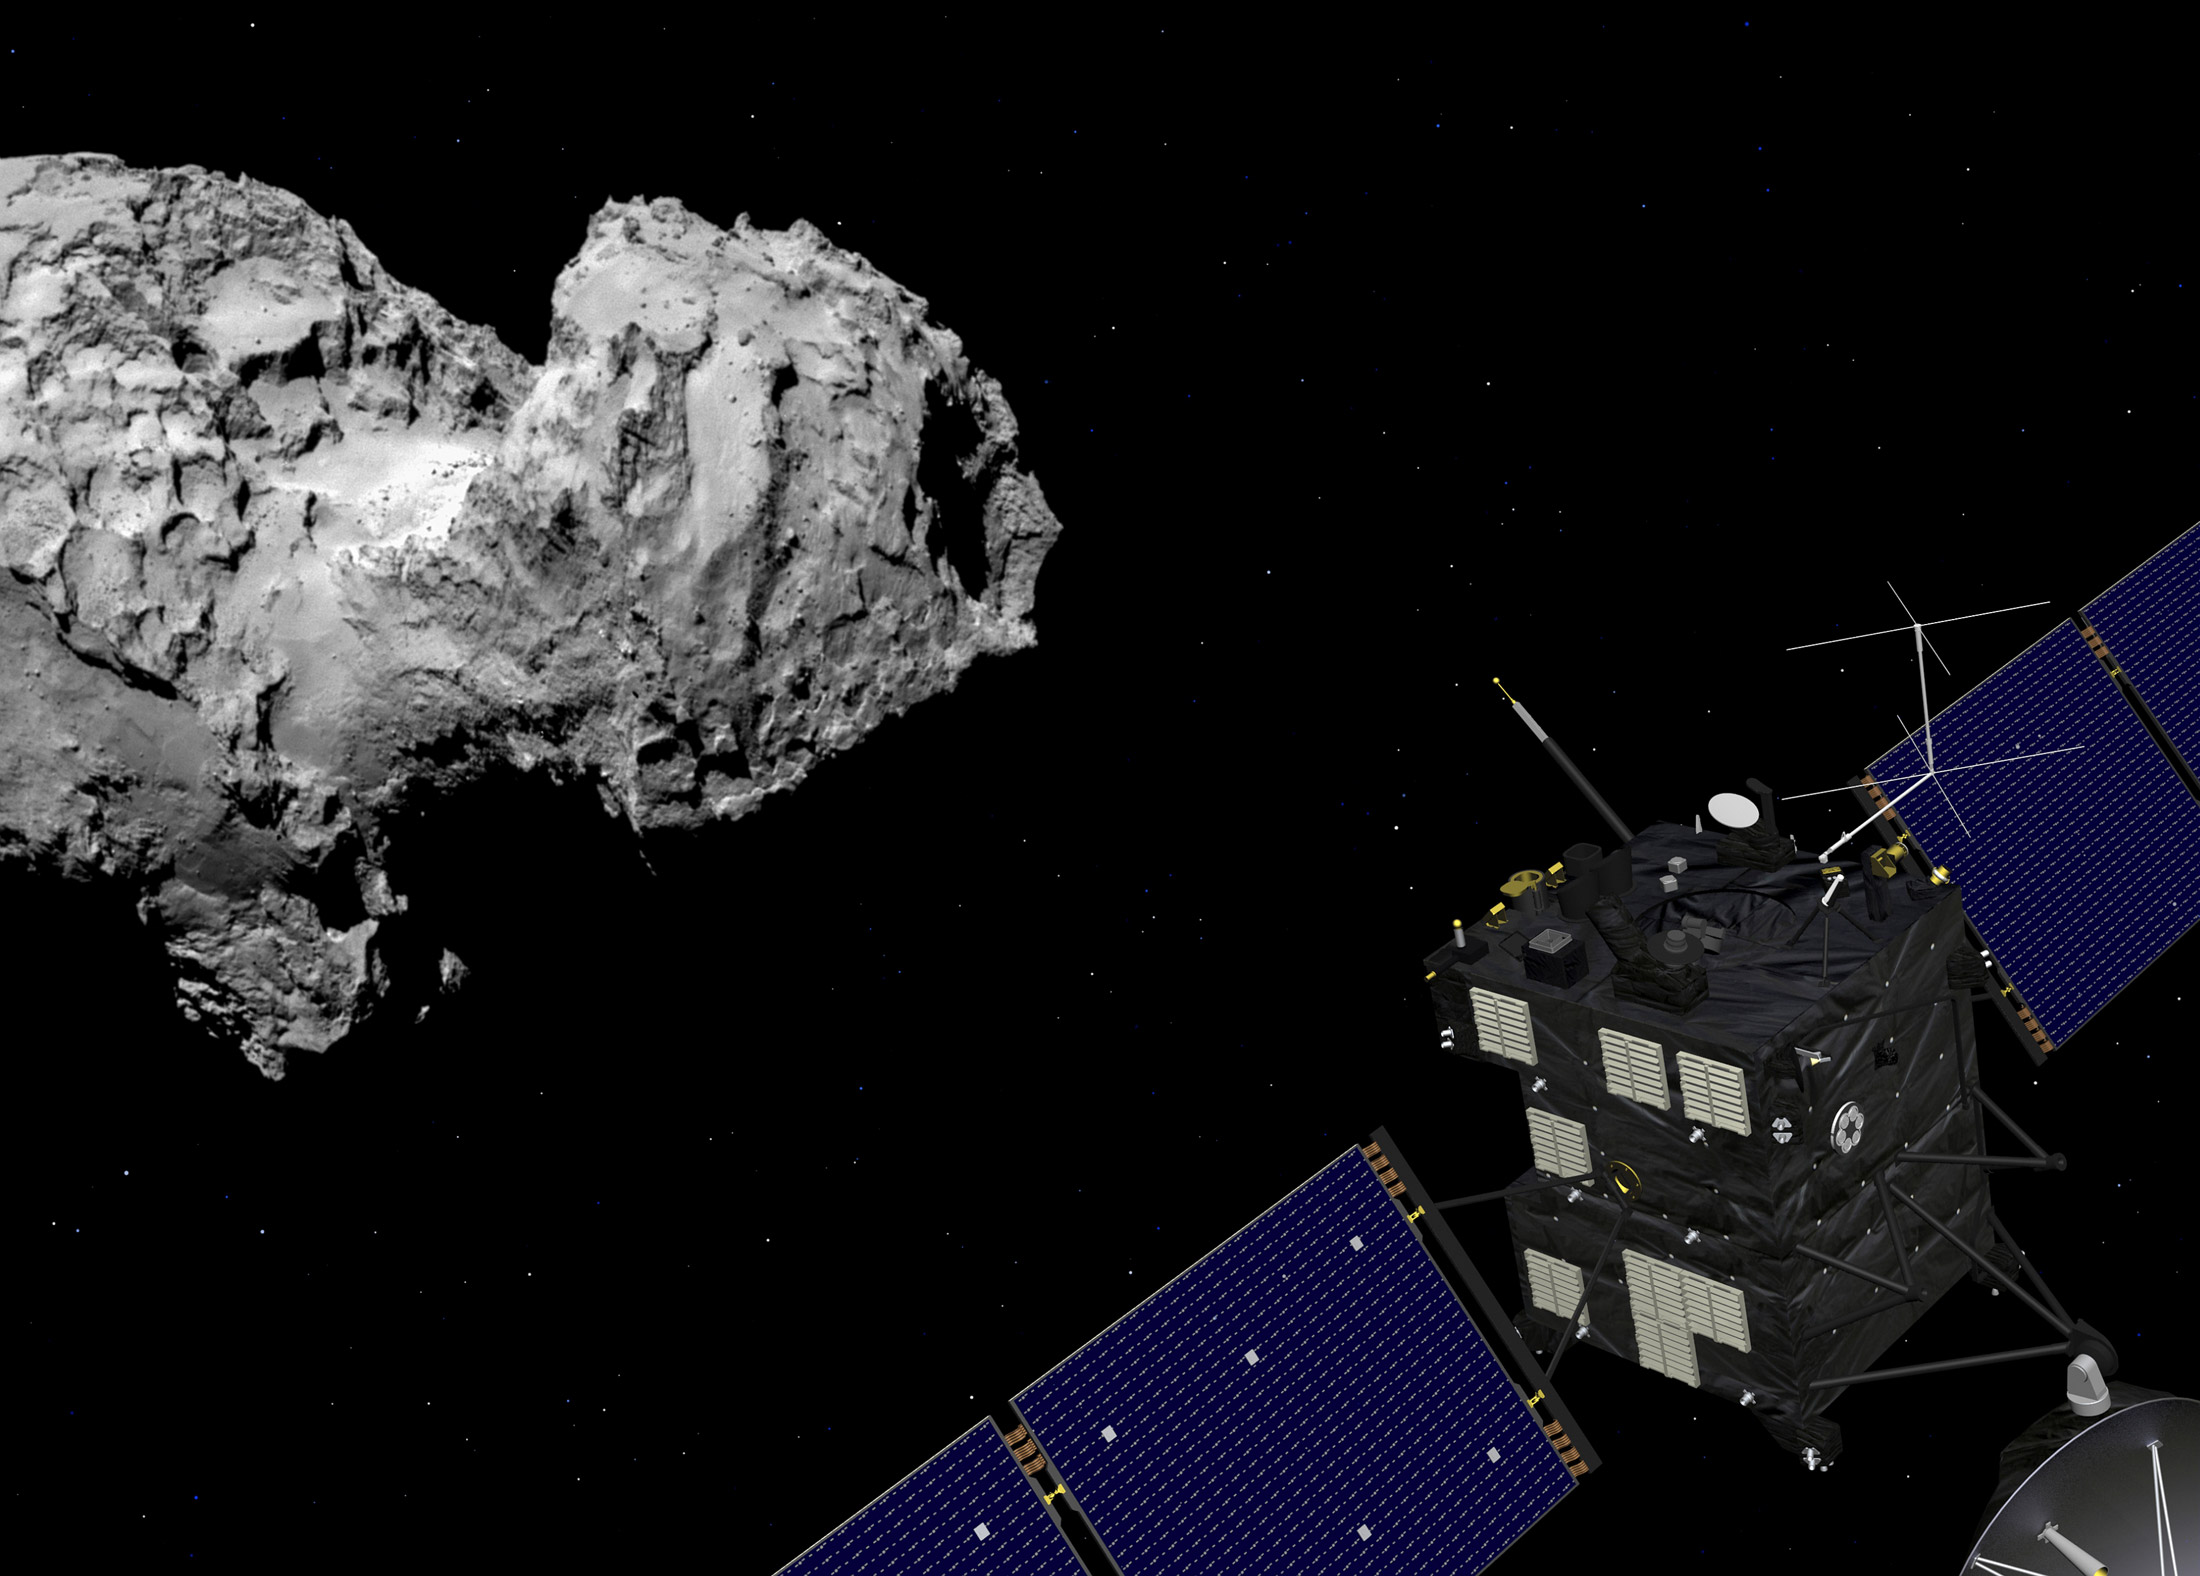 Vue d'artiste de la sonde Rosetta et de la comète Churyumov-Gerasimenko, alias Tchouri. © Rosetta : Esa–J. Huart, 2014 ; Comète : Esa, Rosetta, MPS for Osiris Team